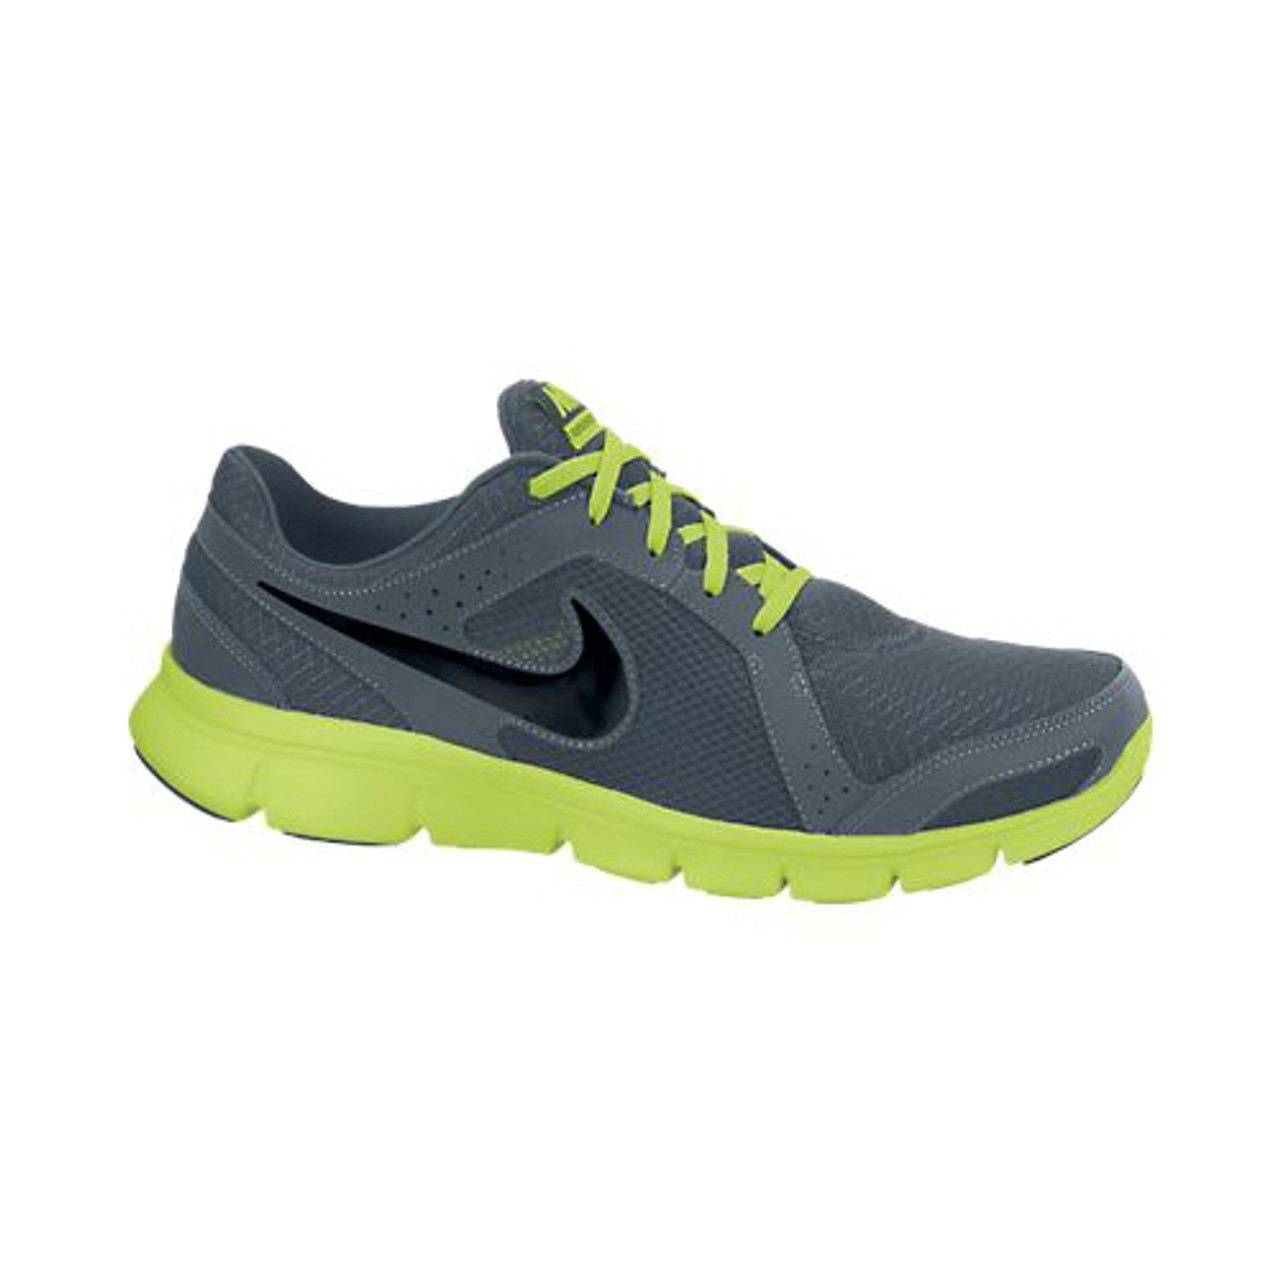 kompensere Ejeren En smule Nike Flex Experience Run 2 Slate/Volt Mens Running Shoes - Armory  Slate/Volt/Black | Discount Nike Men's Athletic & More - Shoolu.com |  Shoolu.com